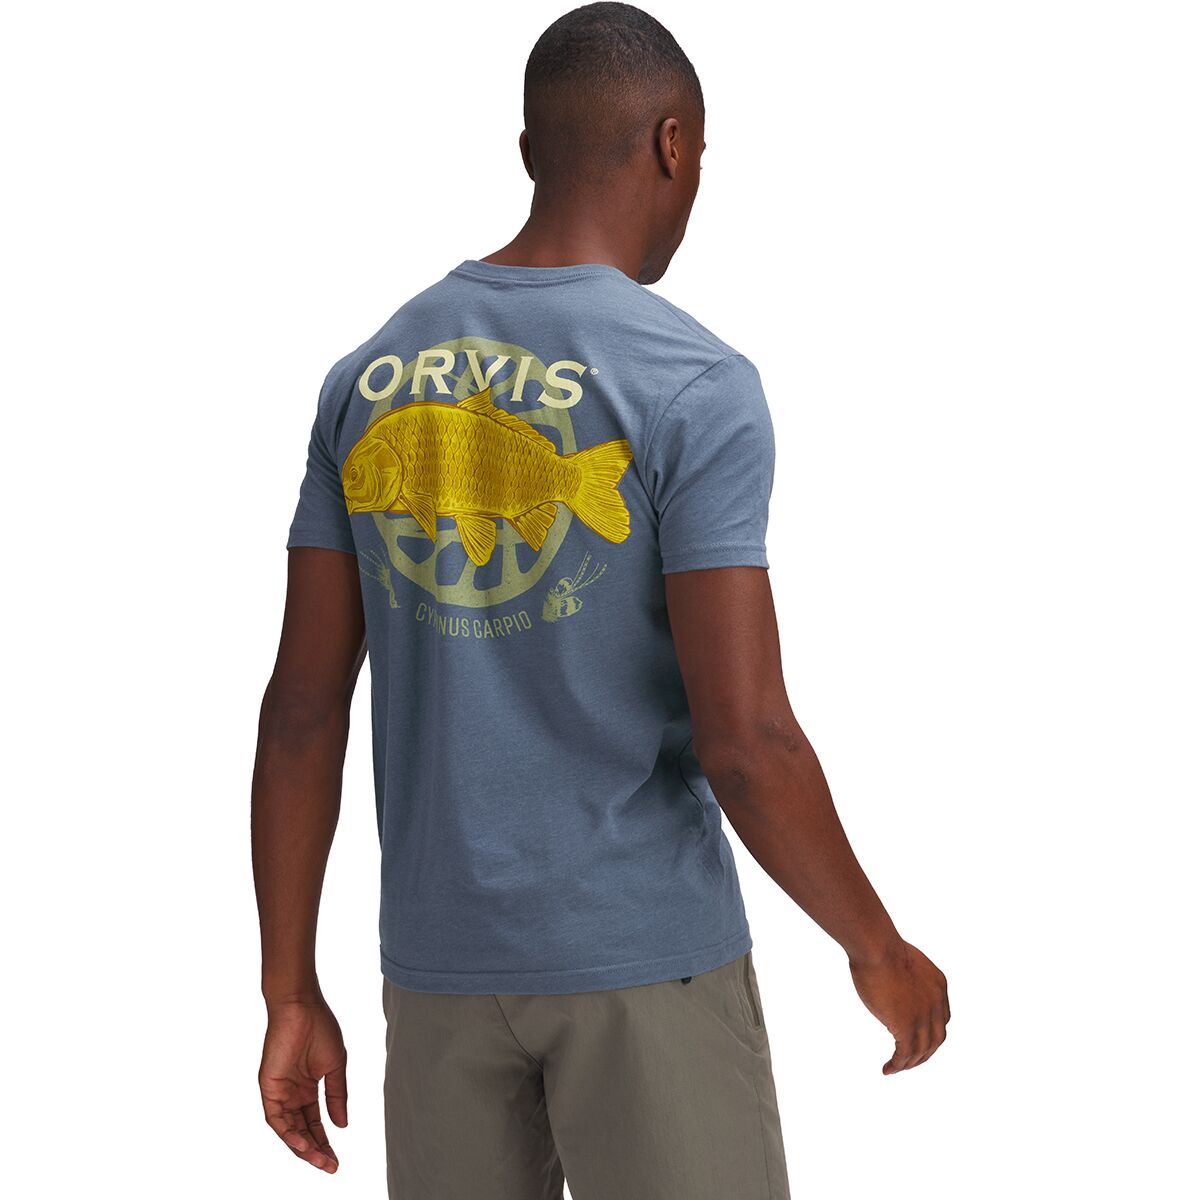 Orvis Cyprinus Carpio T-Shirt - Men's